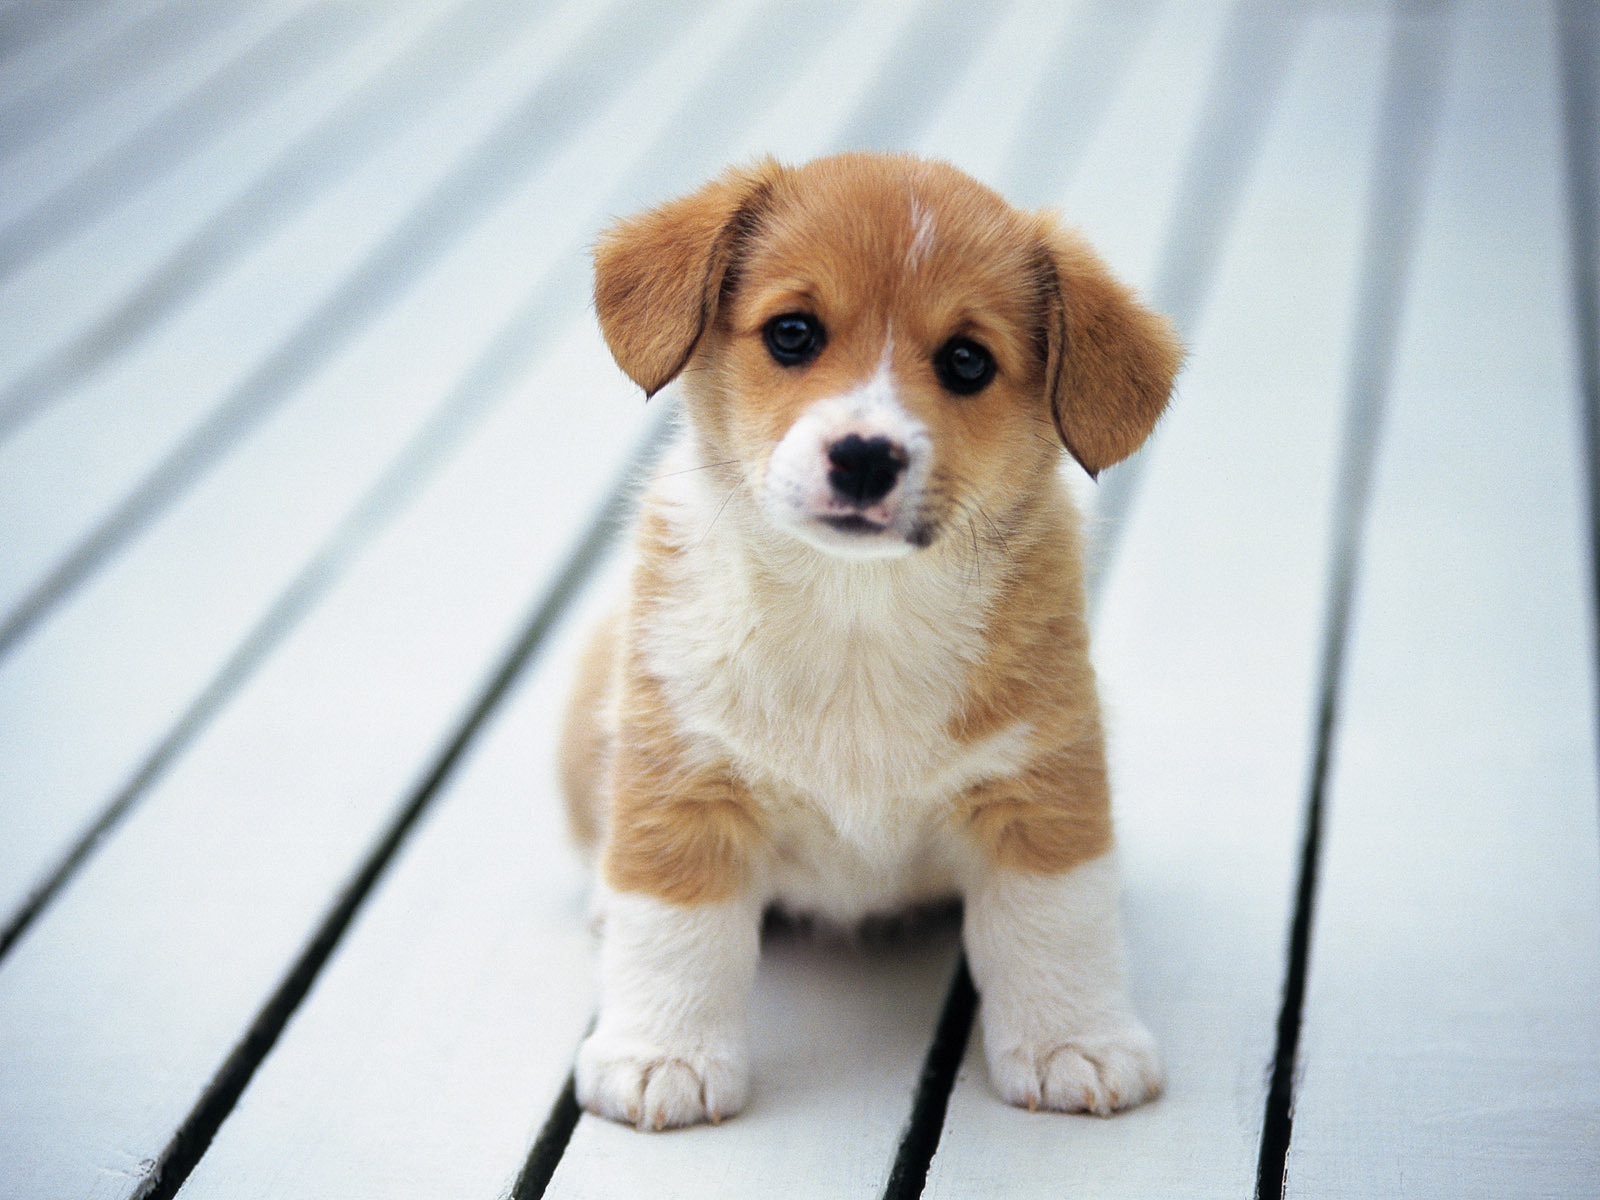 Online Wallpaper Shop Cute Puppy Pictures Image